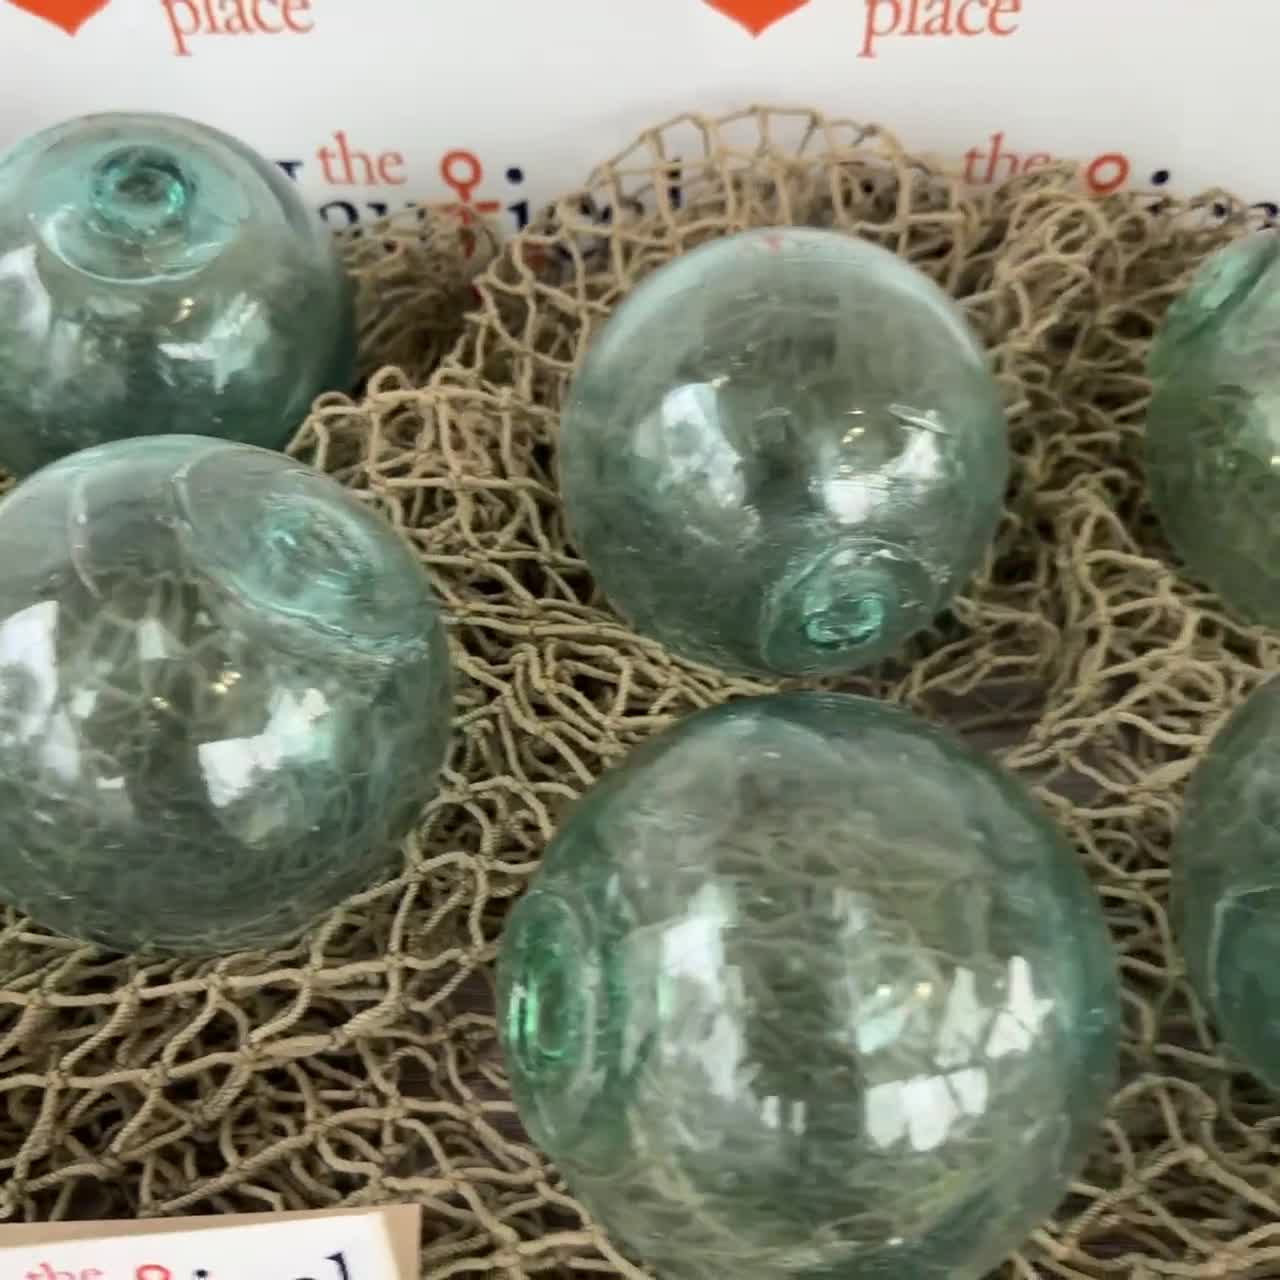 Japanese Glass Fishing Floats, 4” Softball Size, Authentic Glass